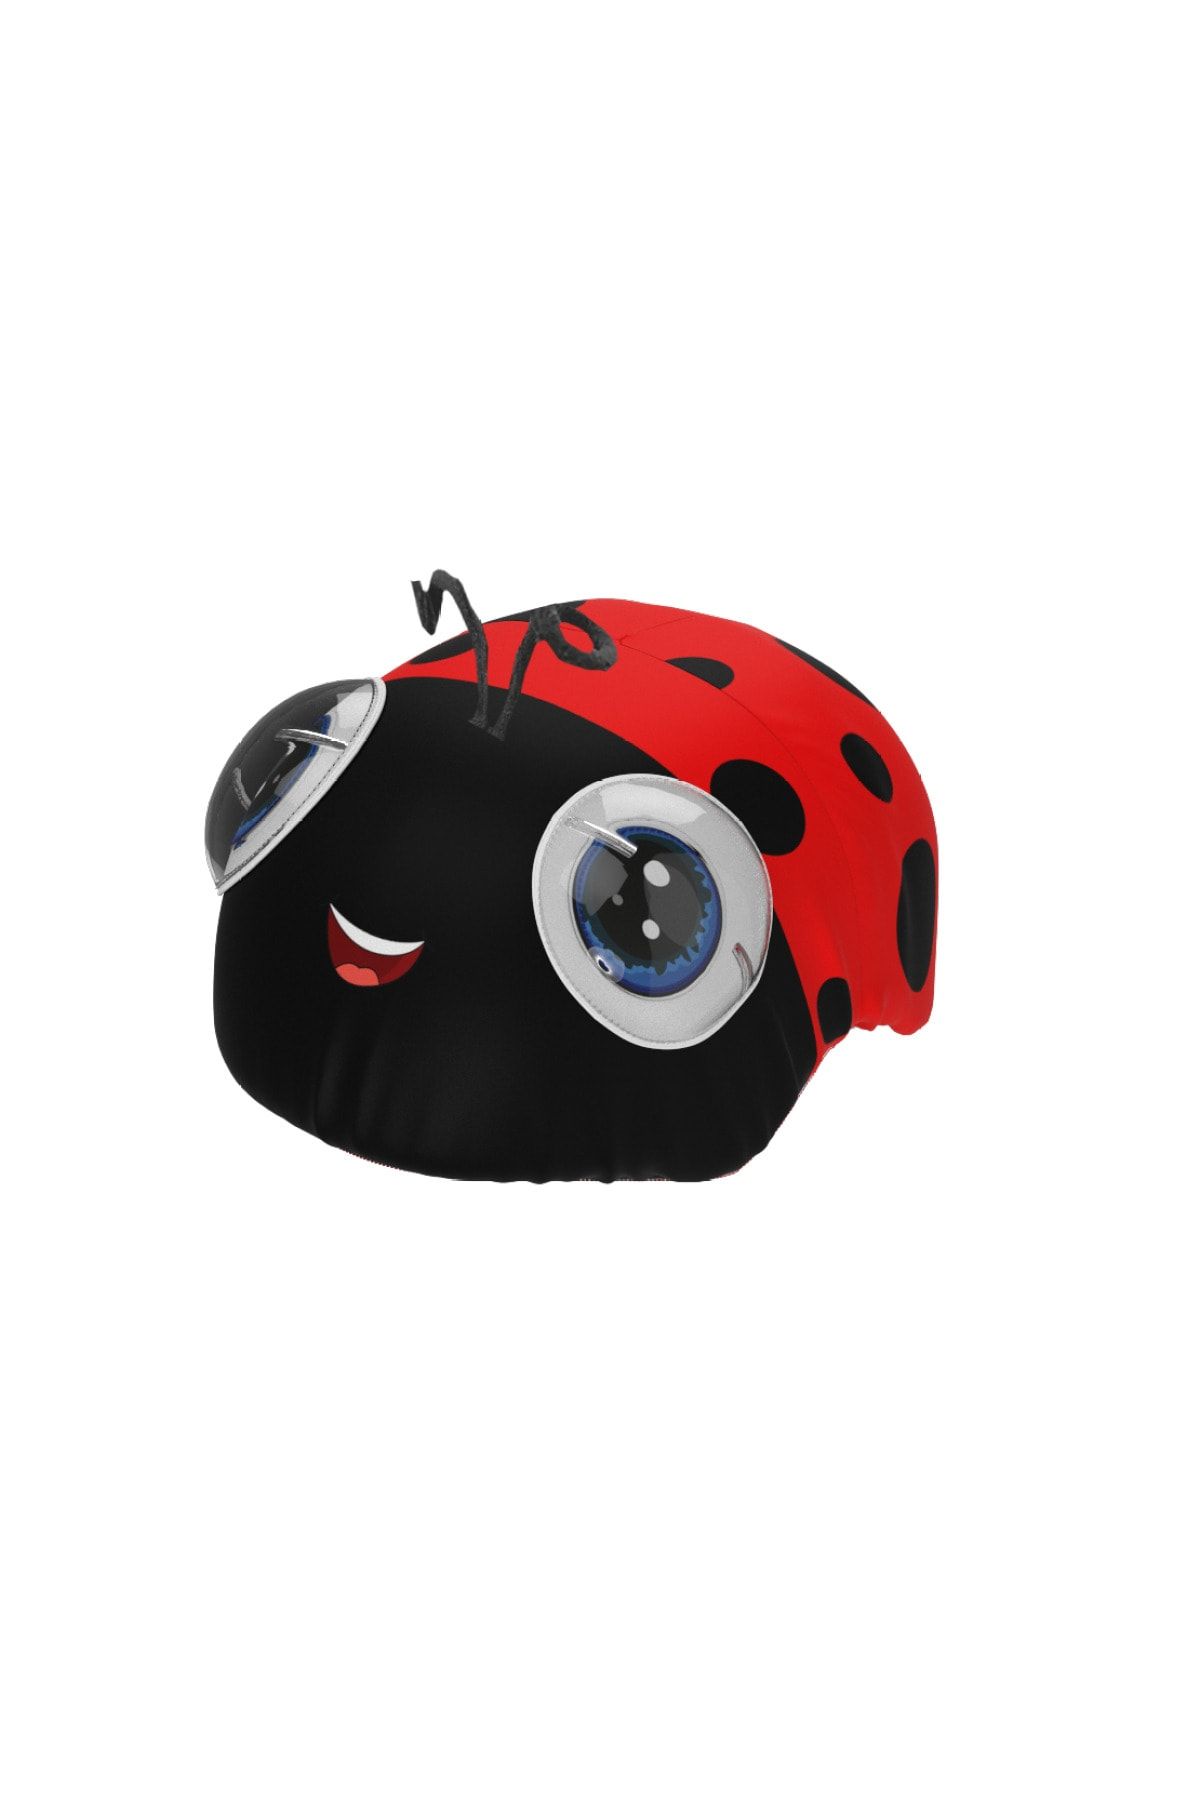 Maskara Ladybug Baskılı 3d Snowboard, Kayak, Bisiklet Kask Kılıfı